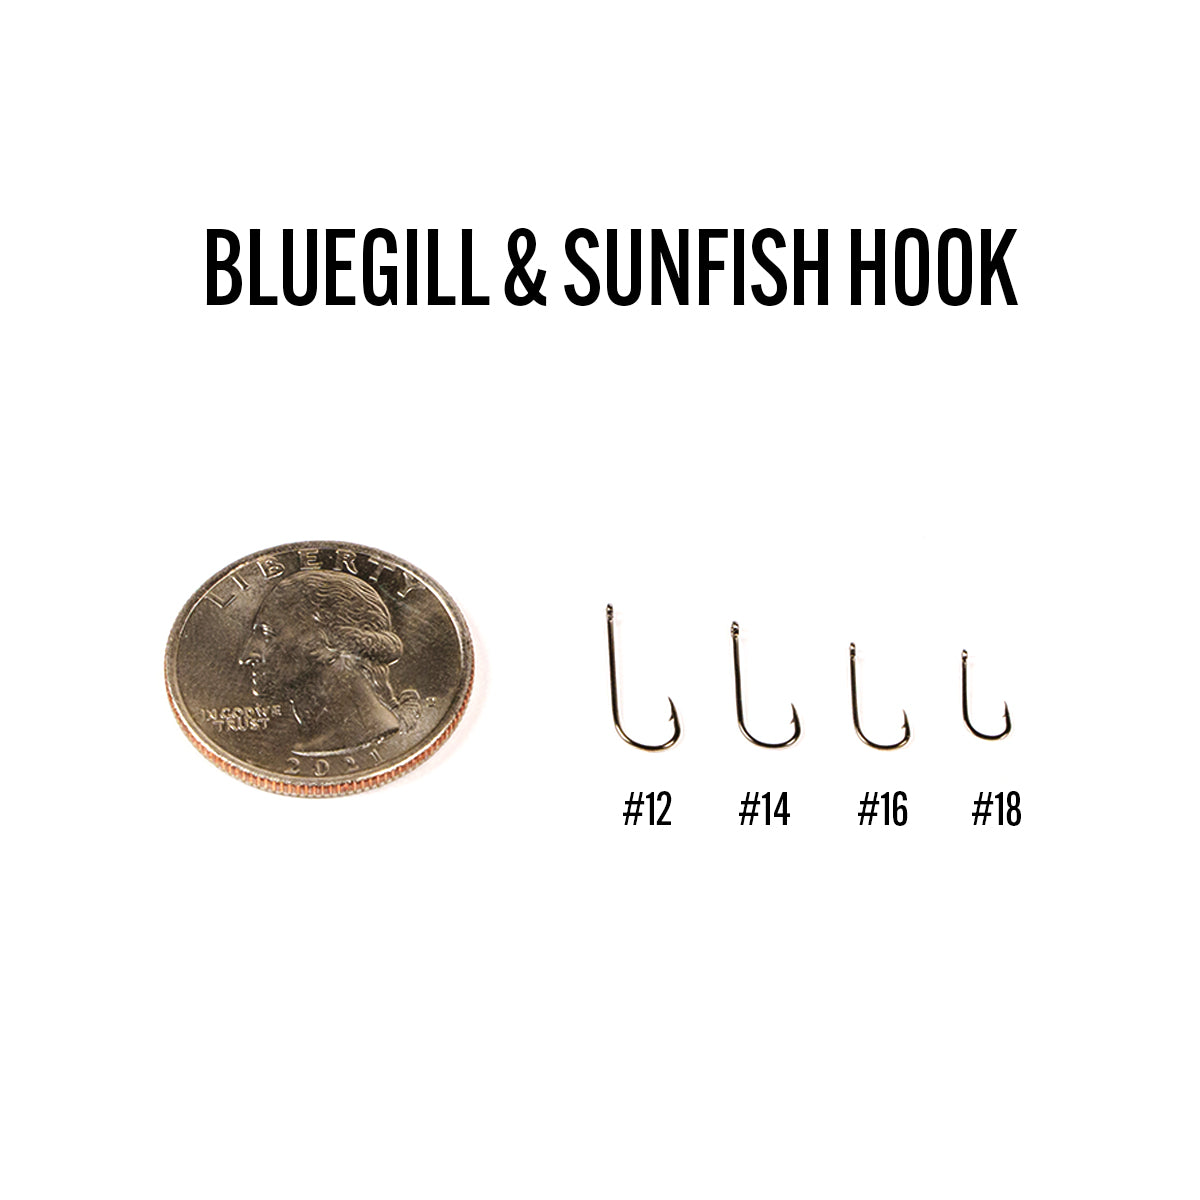 Bluegill and Sunfish Hook